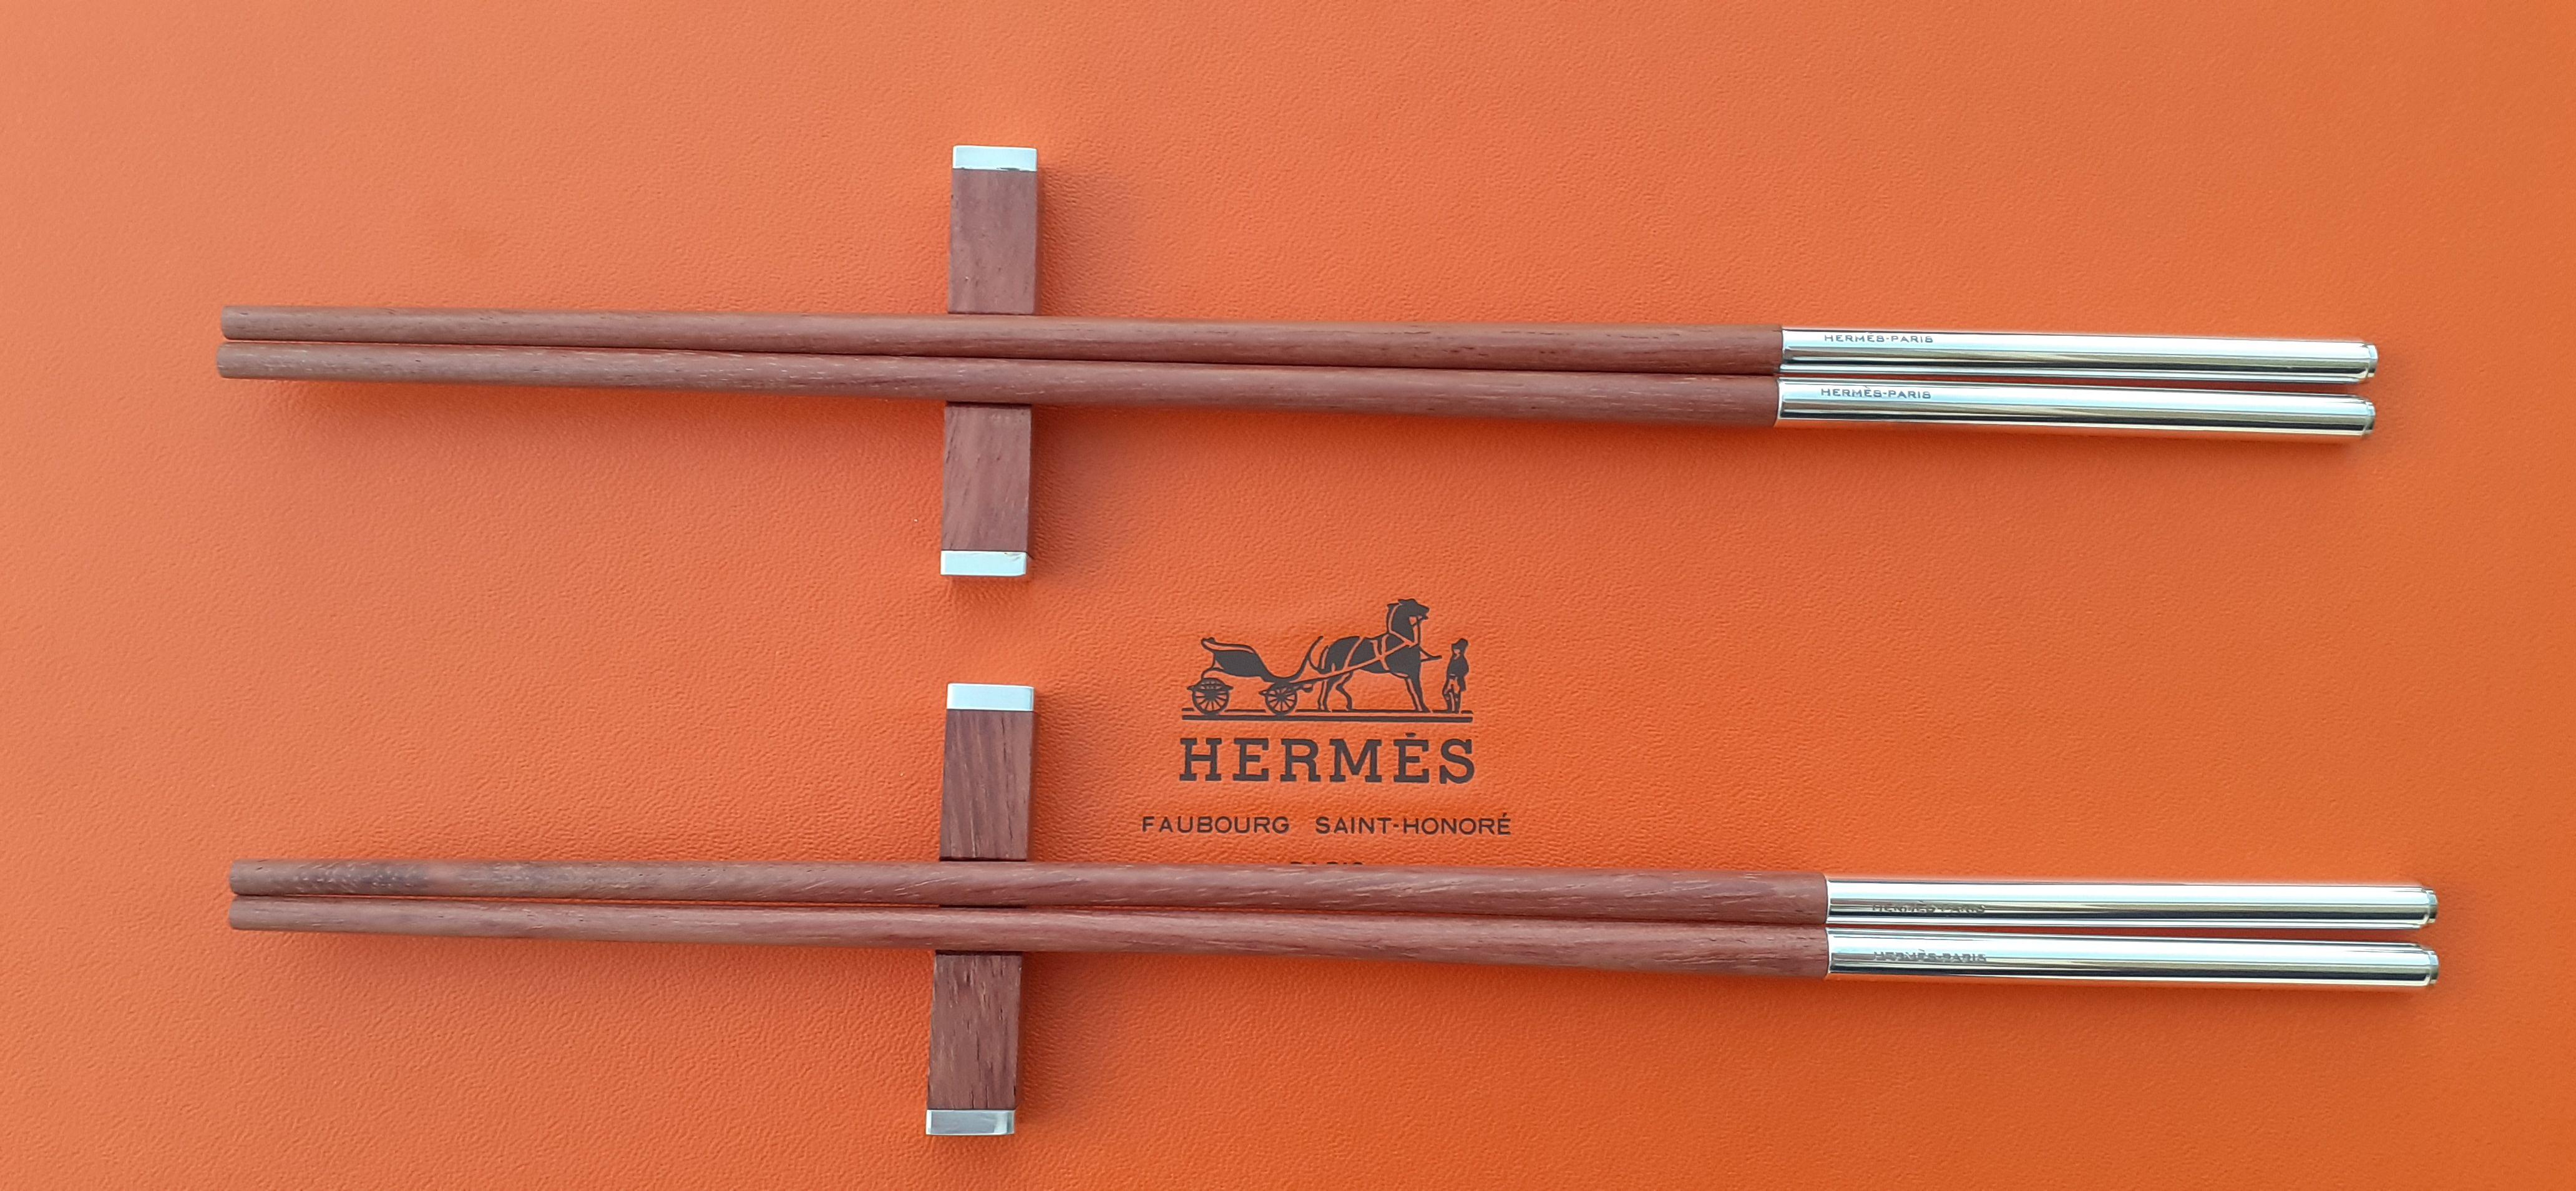 hermes chopsticks